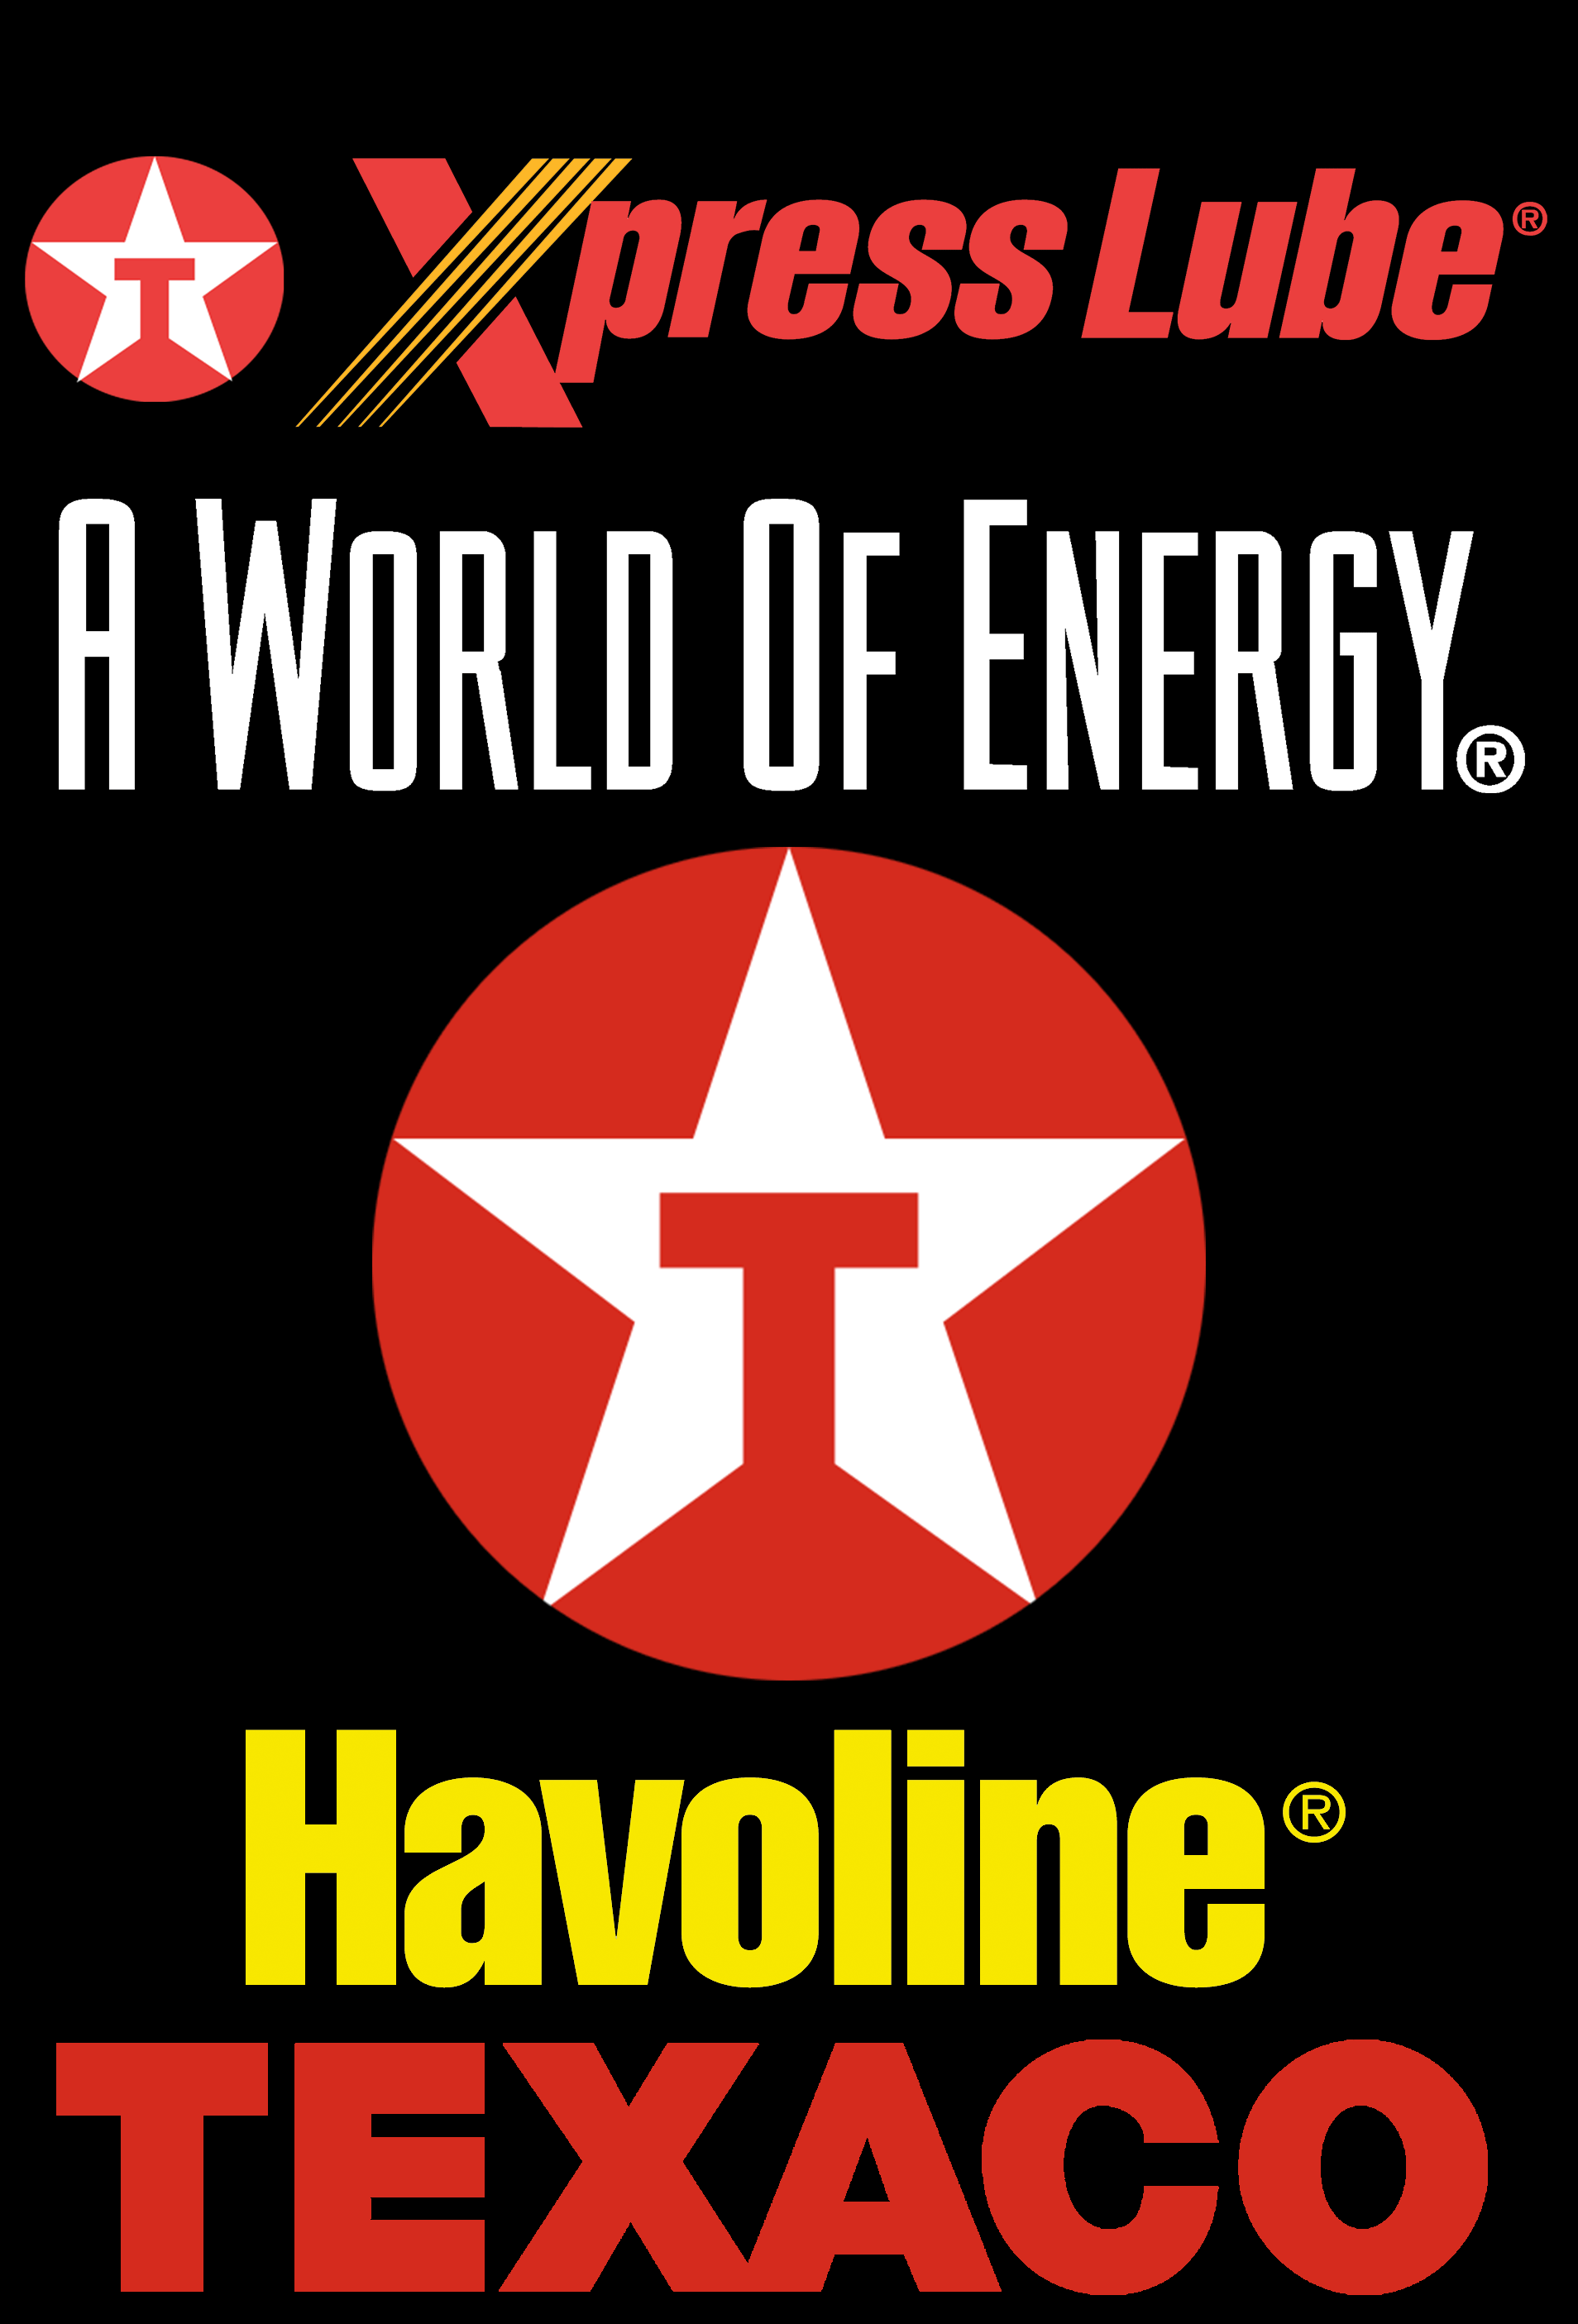 Old Havoline Logo - Kenny Irwin 1999 Texaco Havoline Logo Sheet